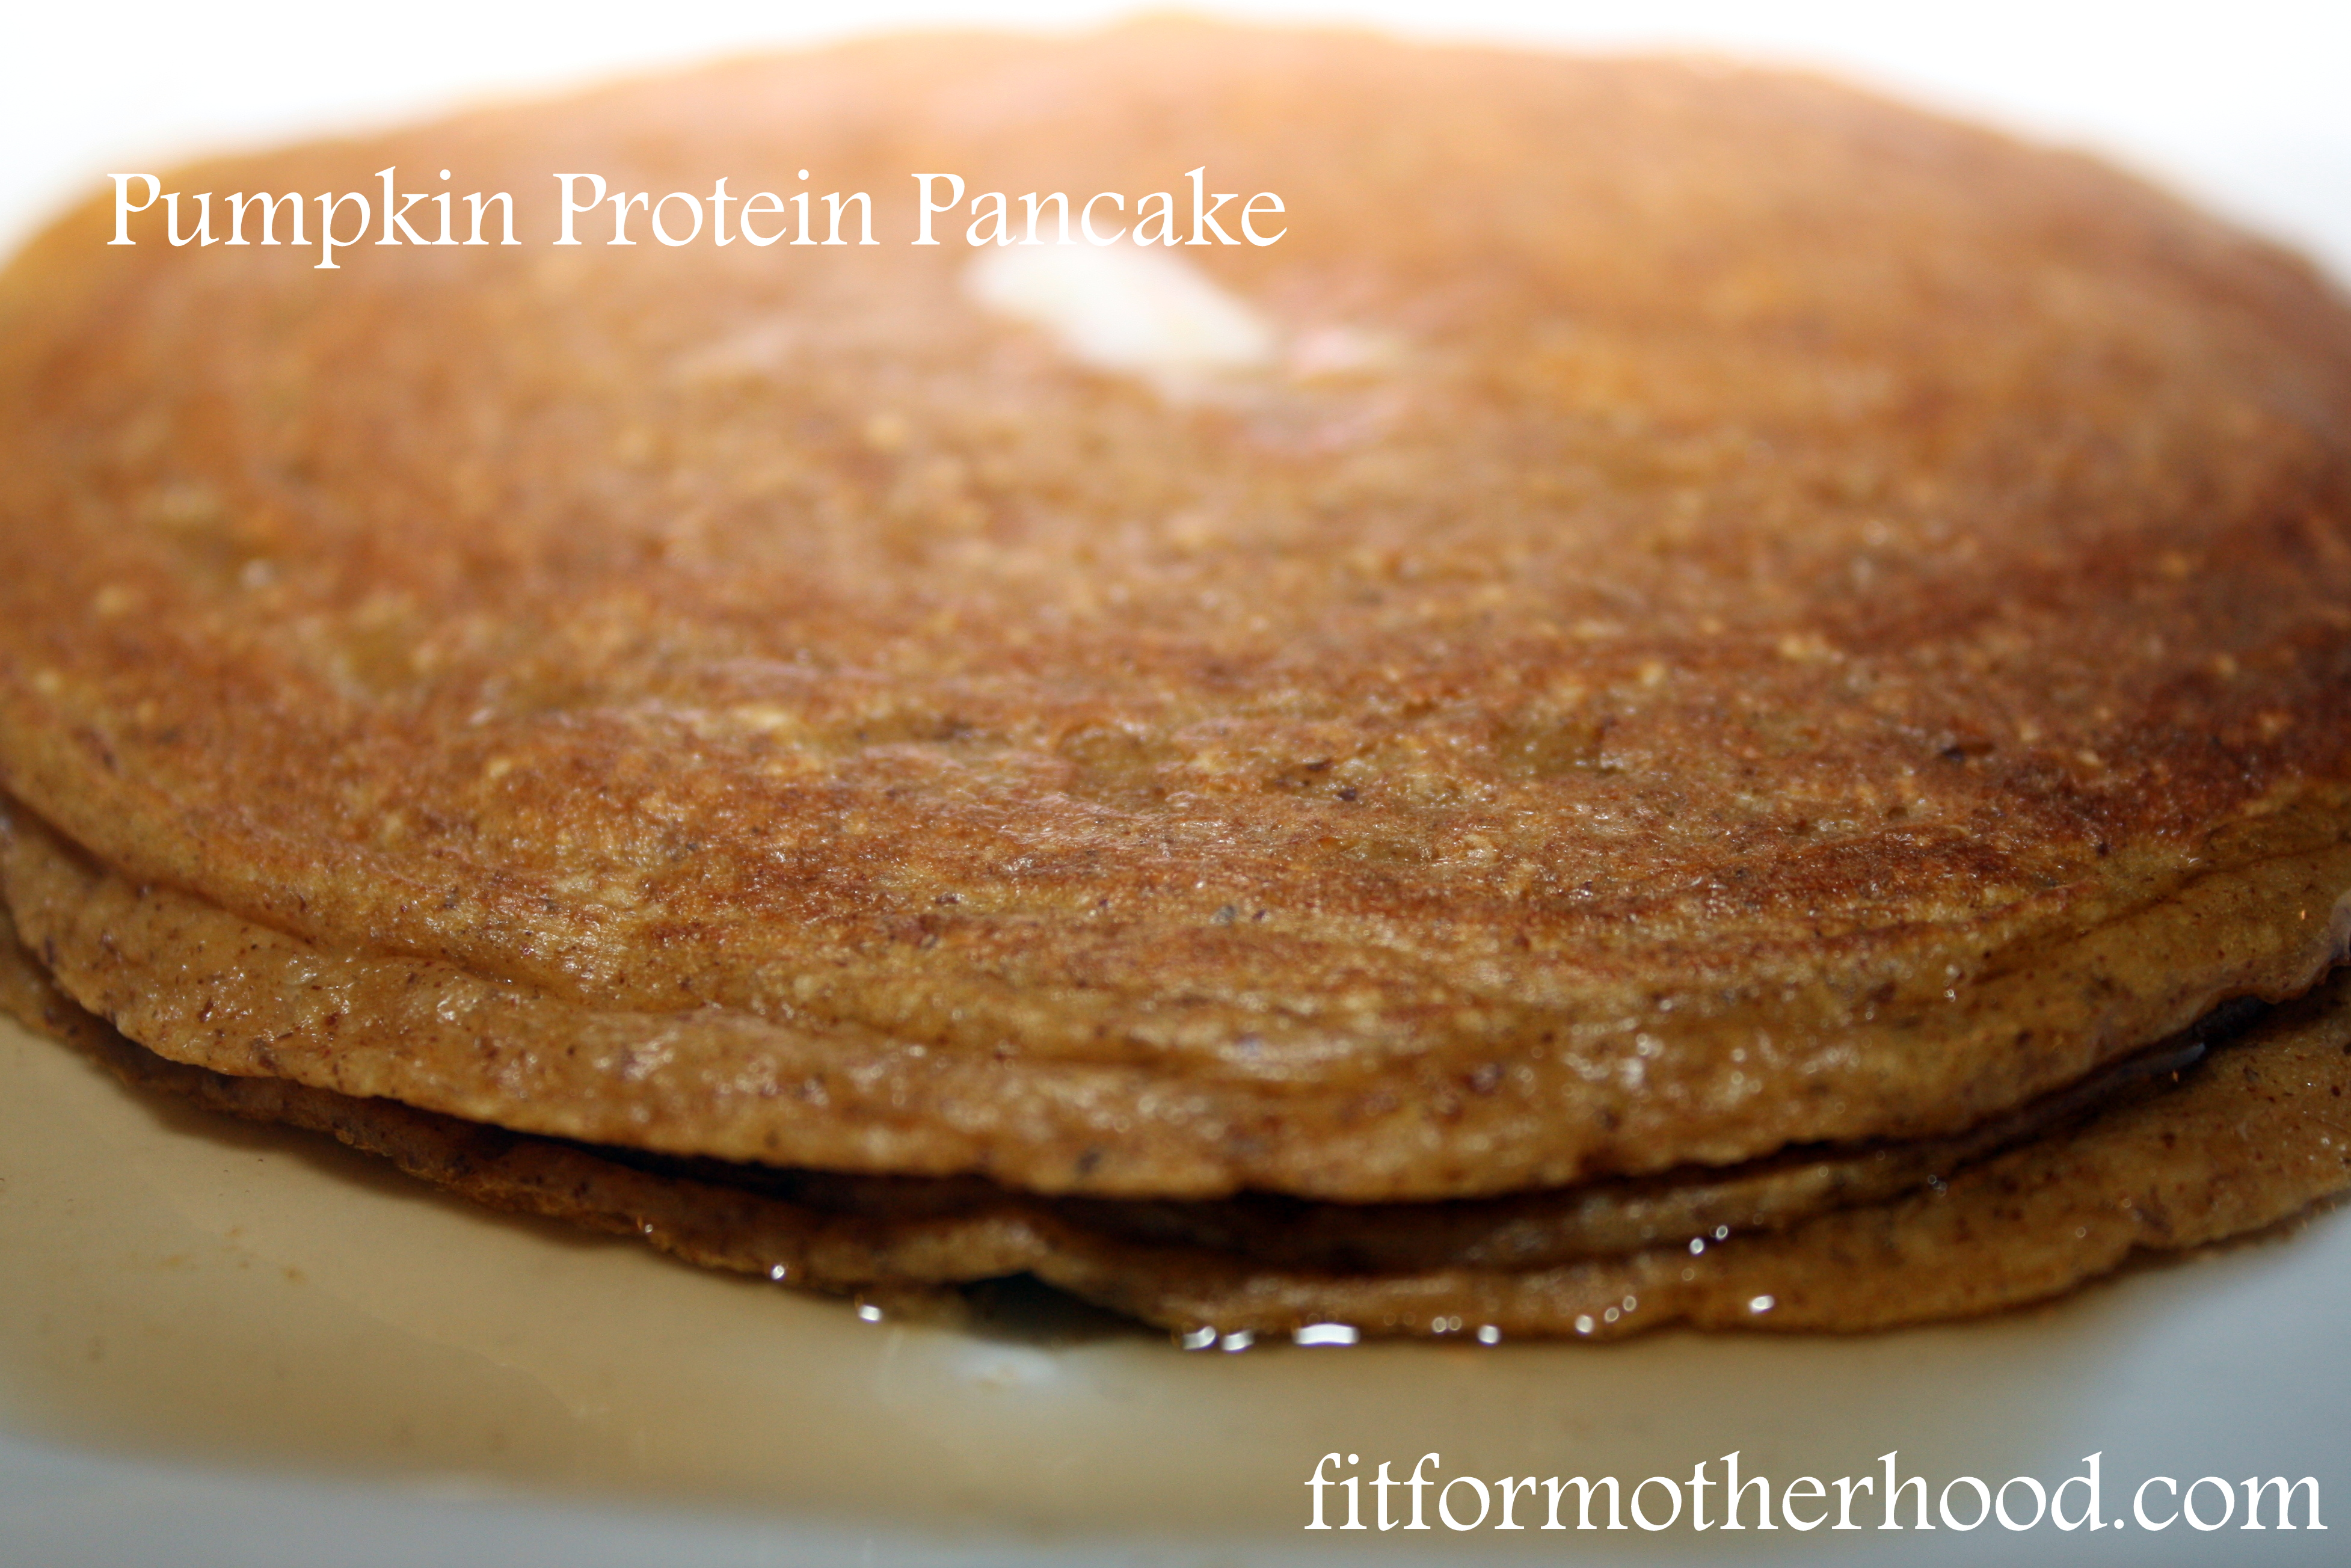 WIAW # 114 – 21 Day Fix Pumpkin Protein Pancakes